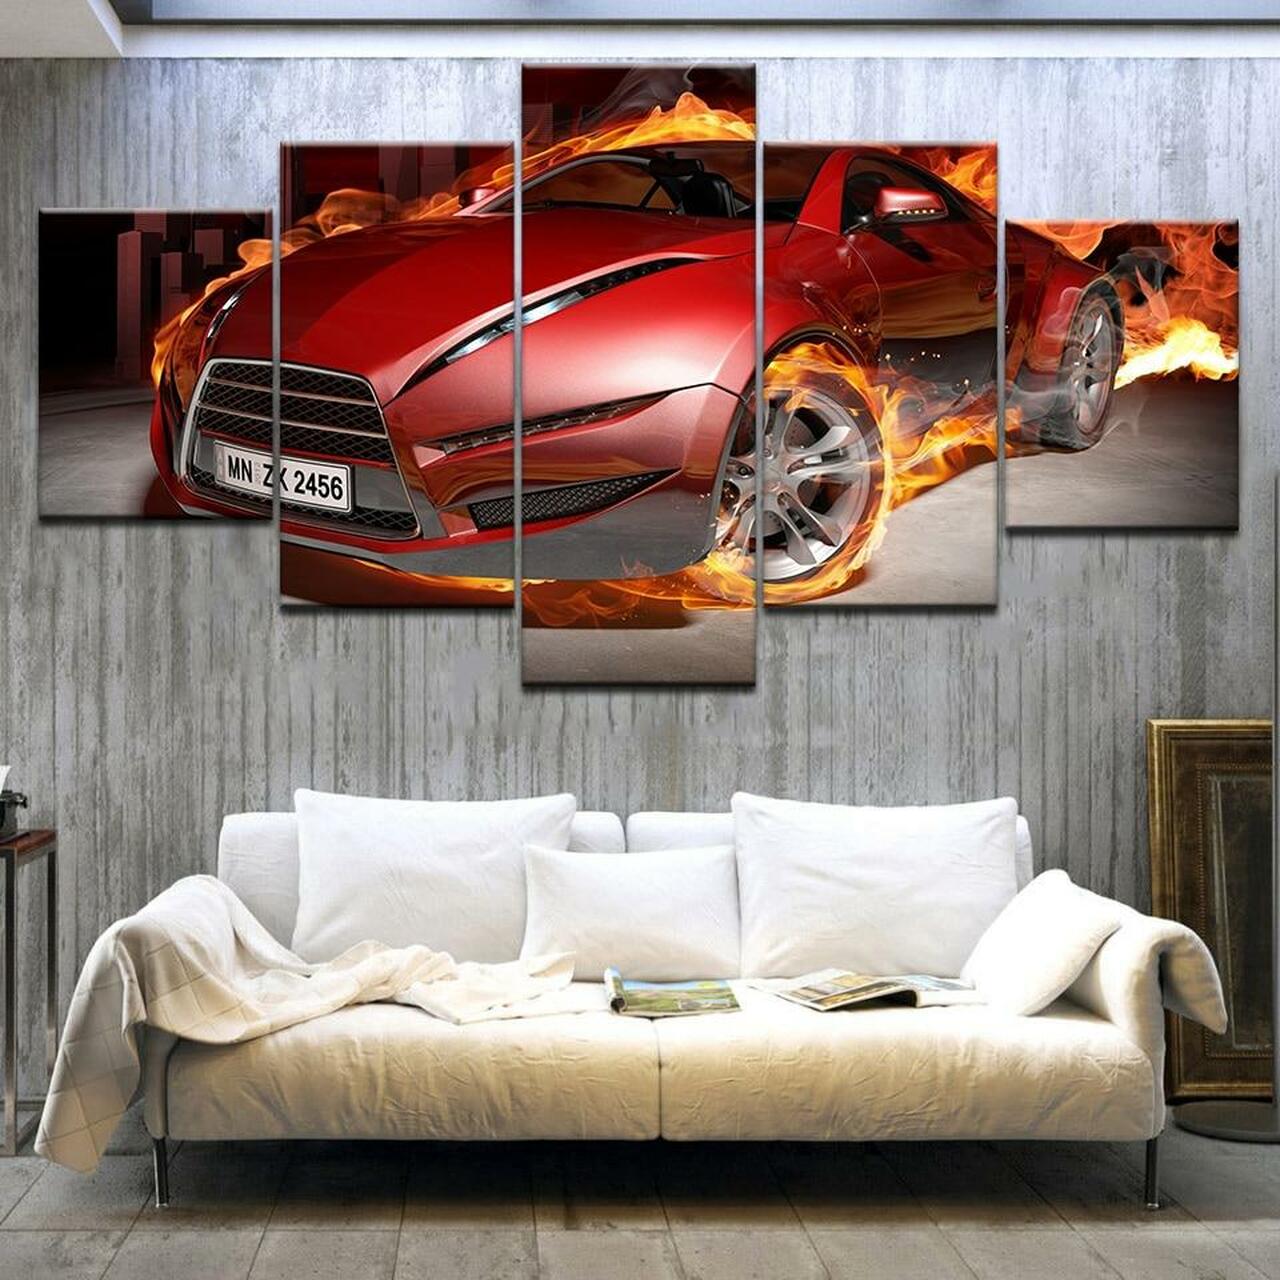 Red Sports Car 5 Piece Canvas Art Wall Decor